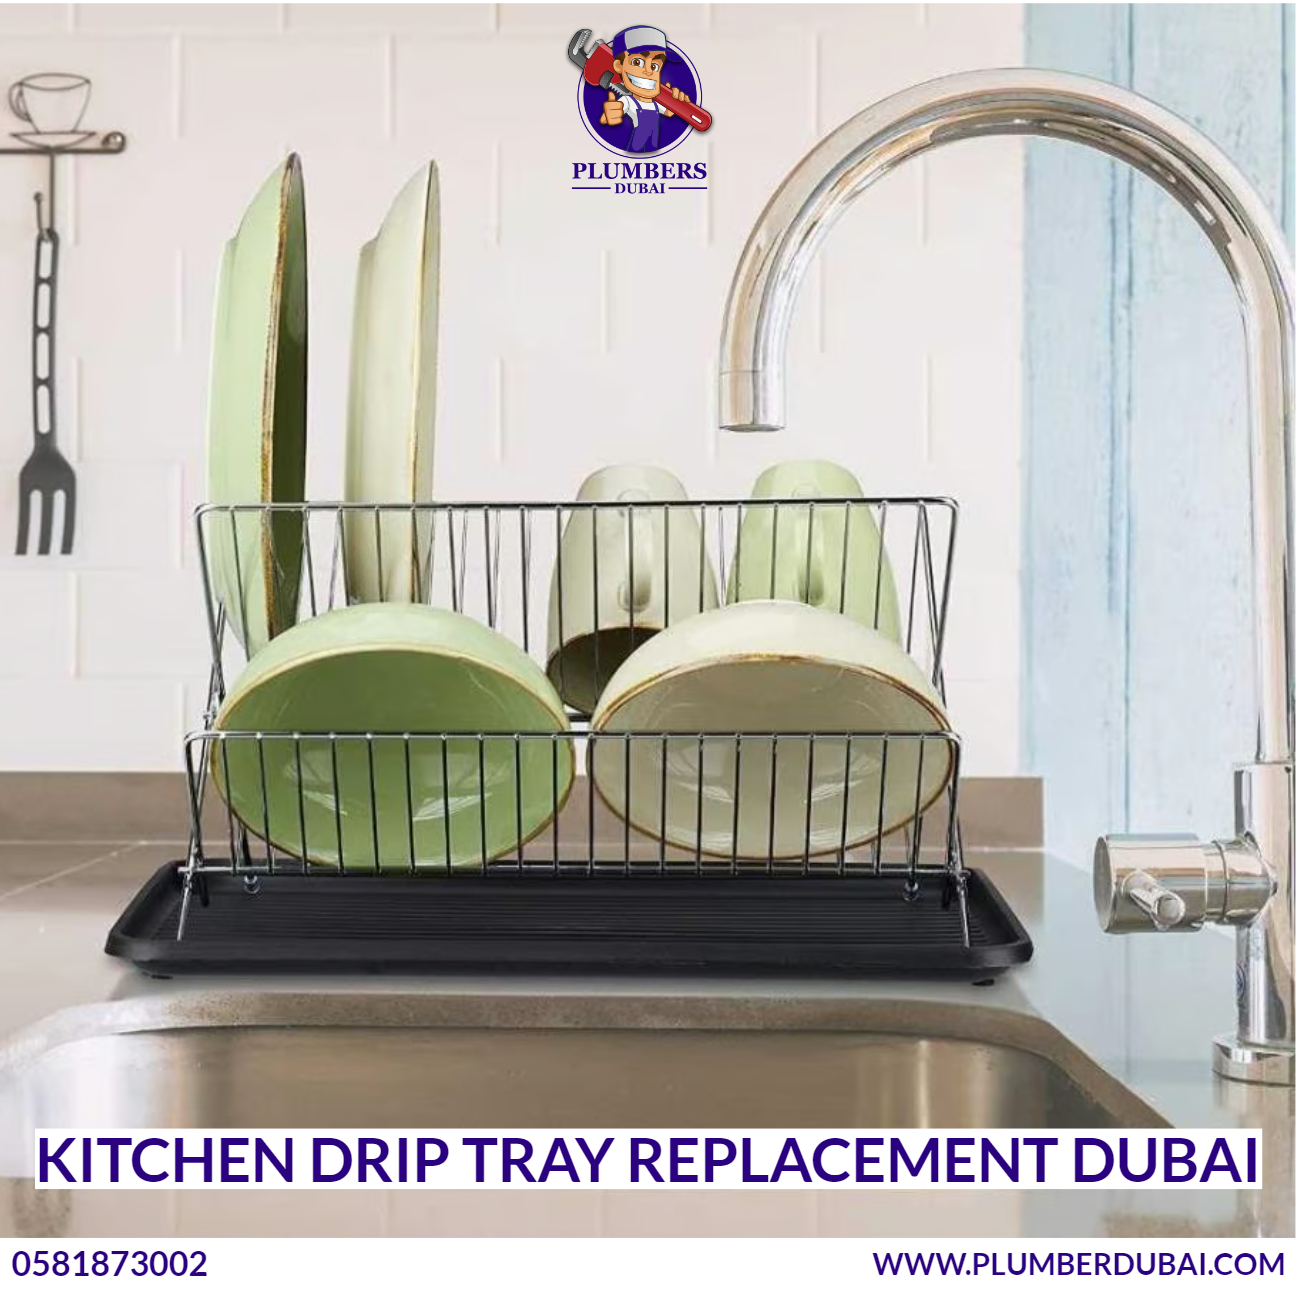 Kitchen Drip Tray Replacement Dubai